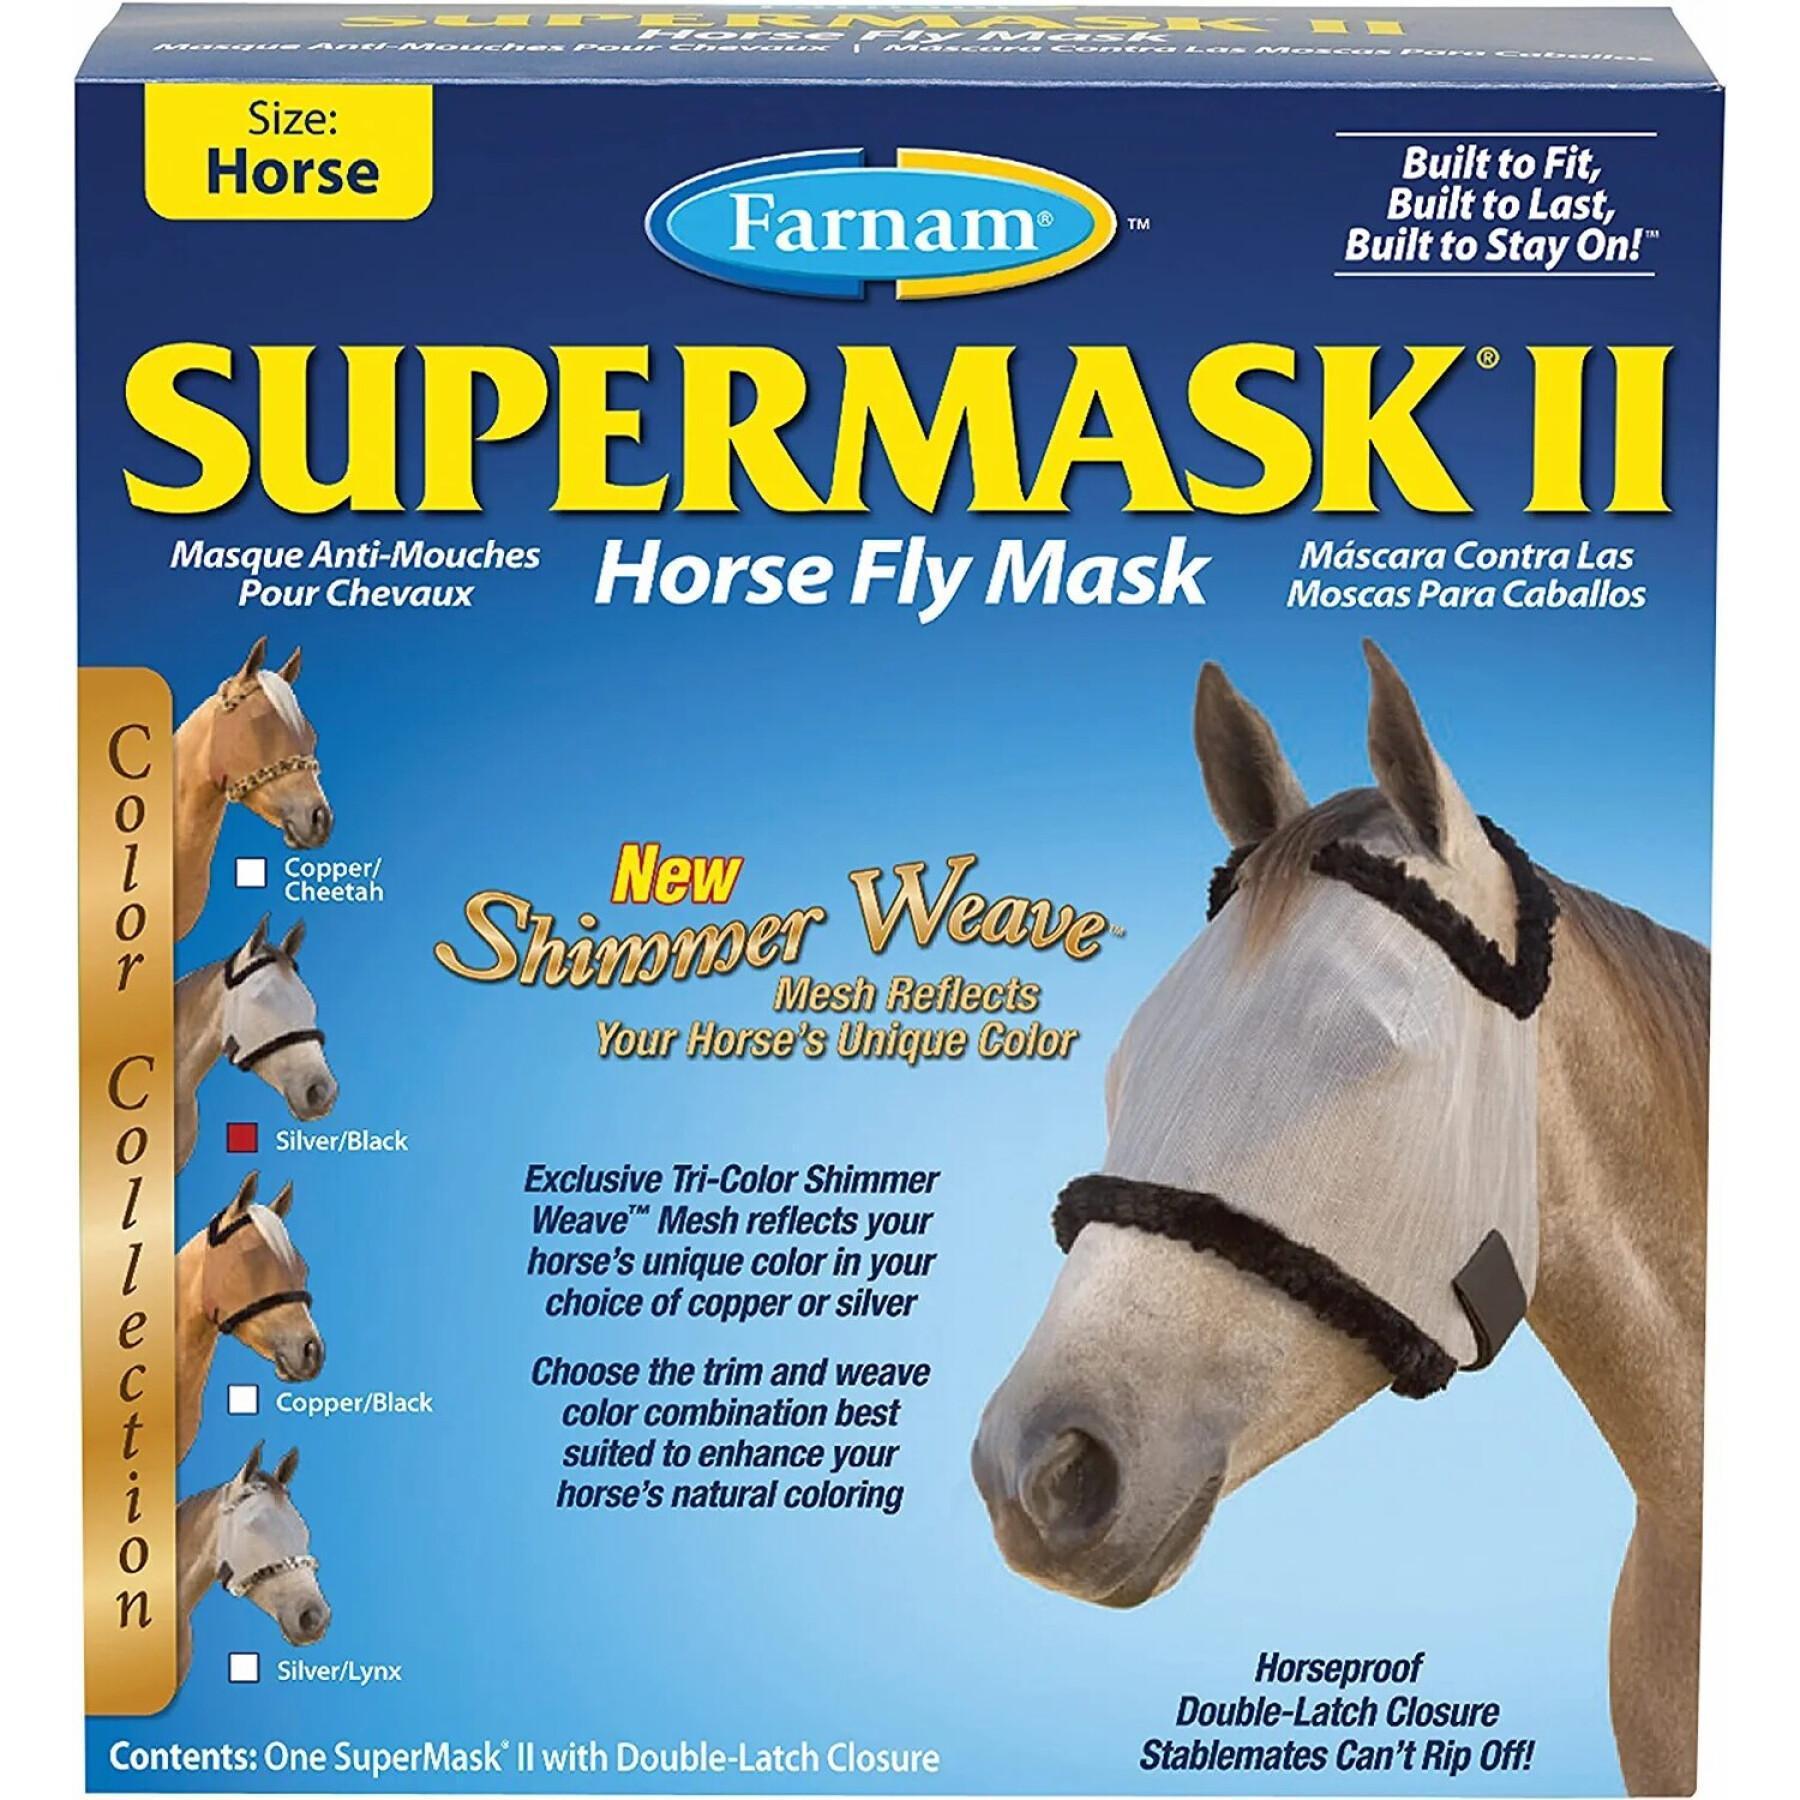 Maska przeciw muchom dla koni bez uszu Farnam Supermask II Yearling yearling